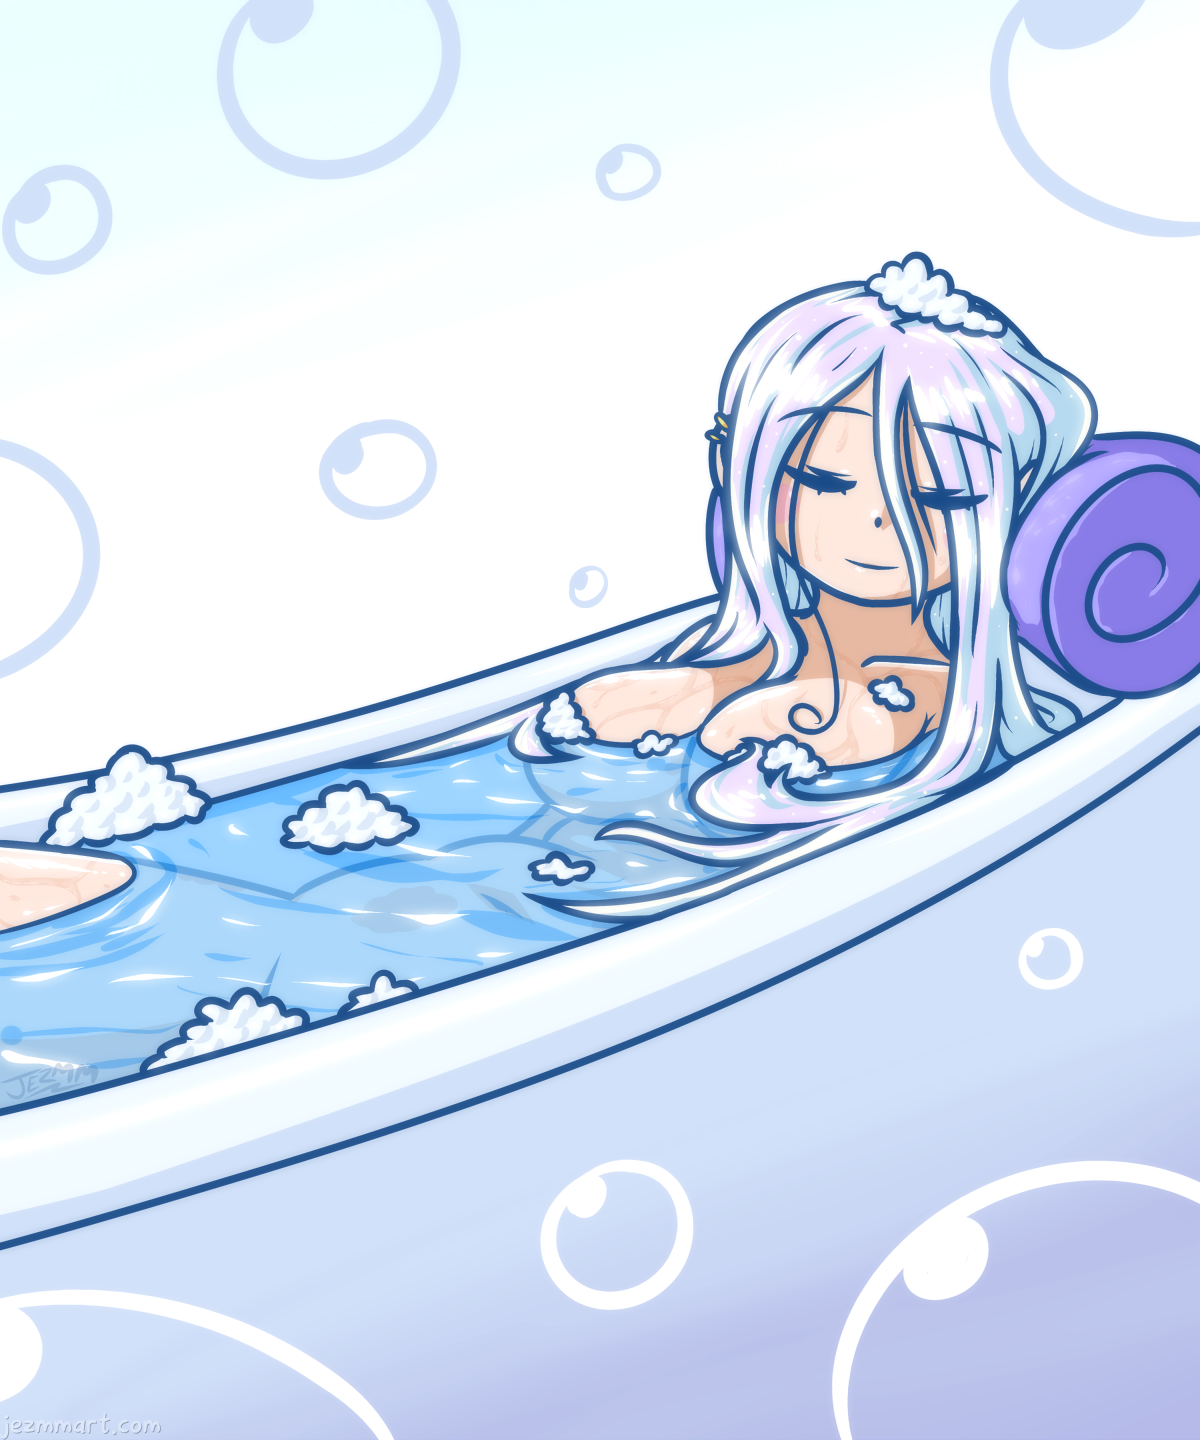 Bedruary Day 08 - Dozing in a Warm Bath